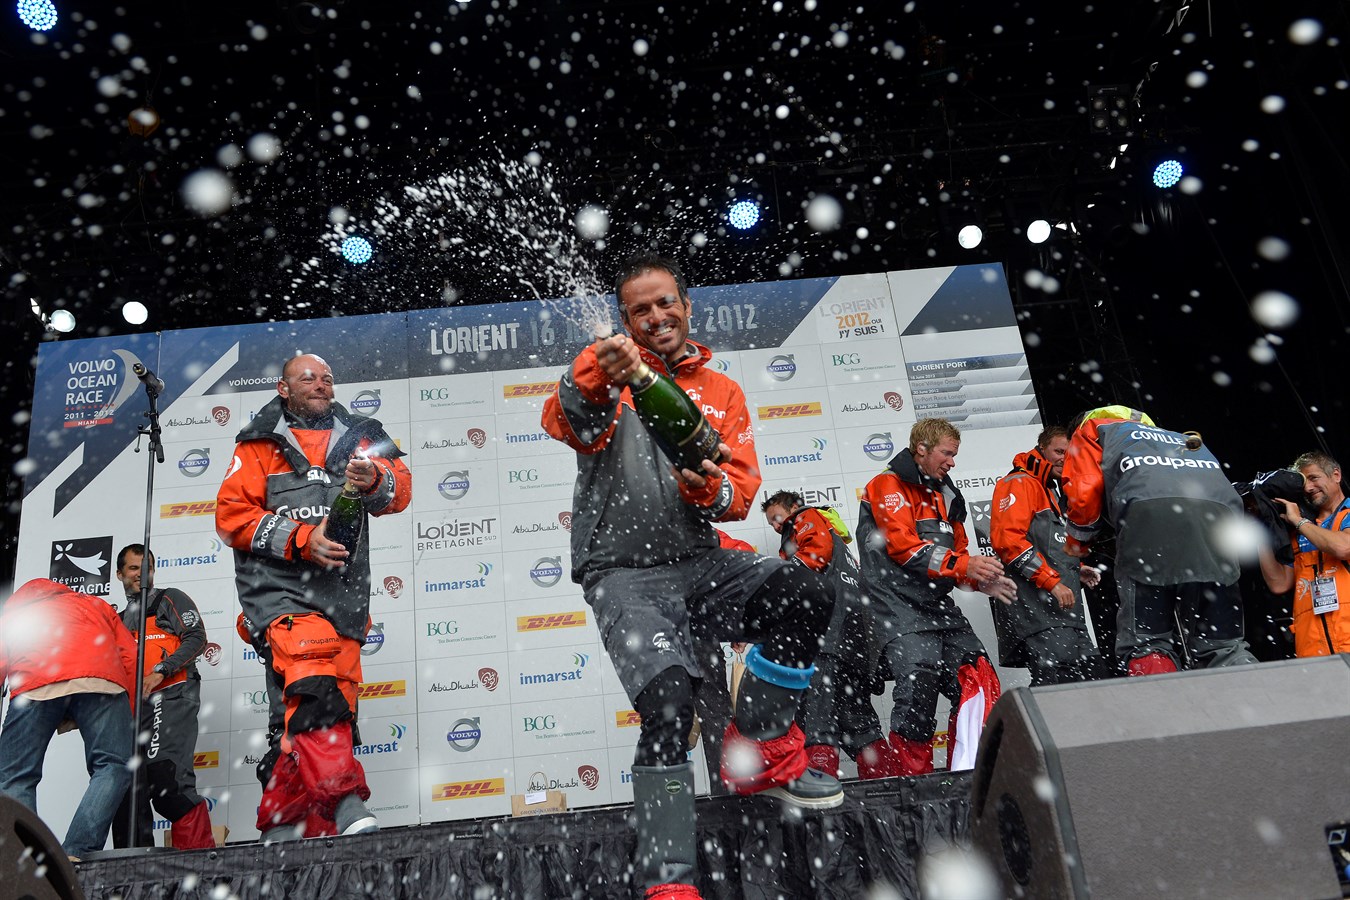 Groupama 4 remporte la 8ème étape de la Volvo Ocean Race !